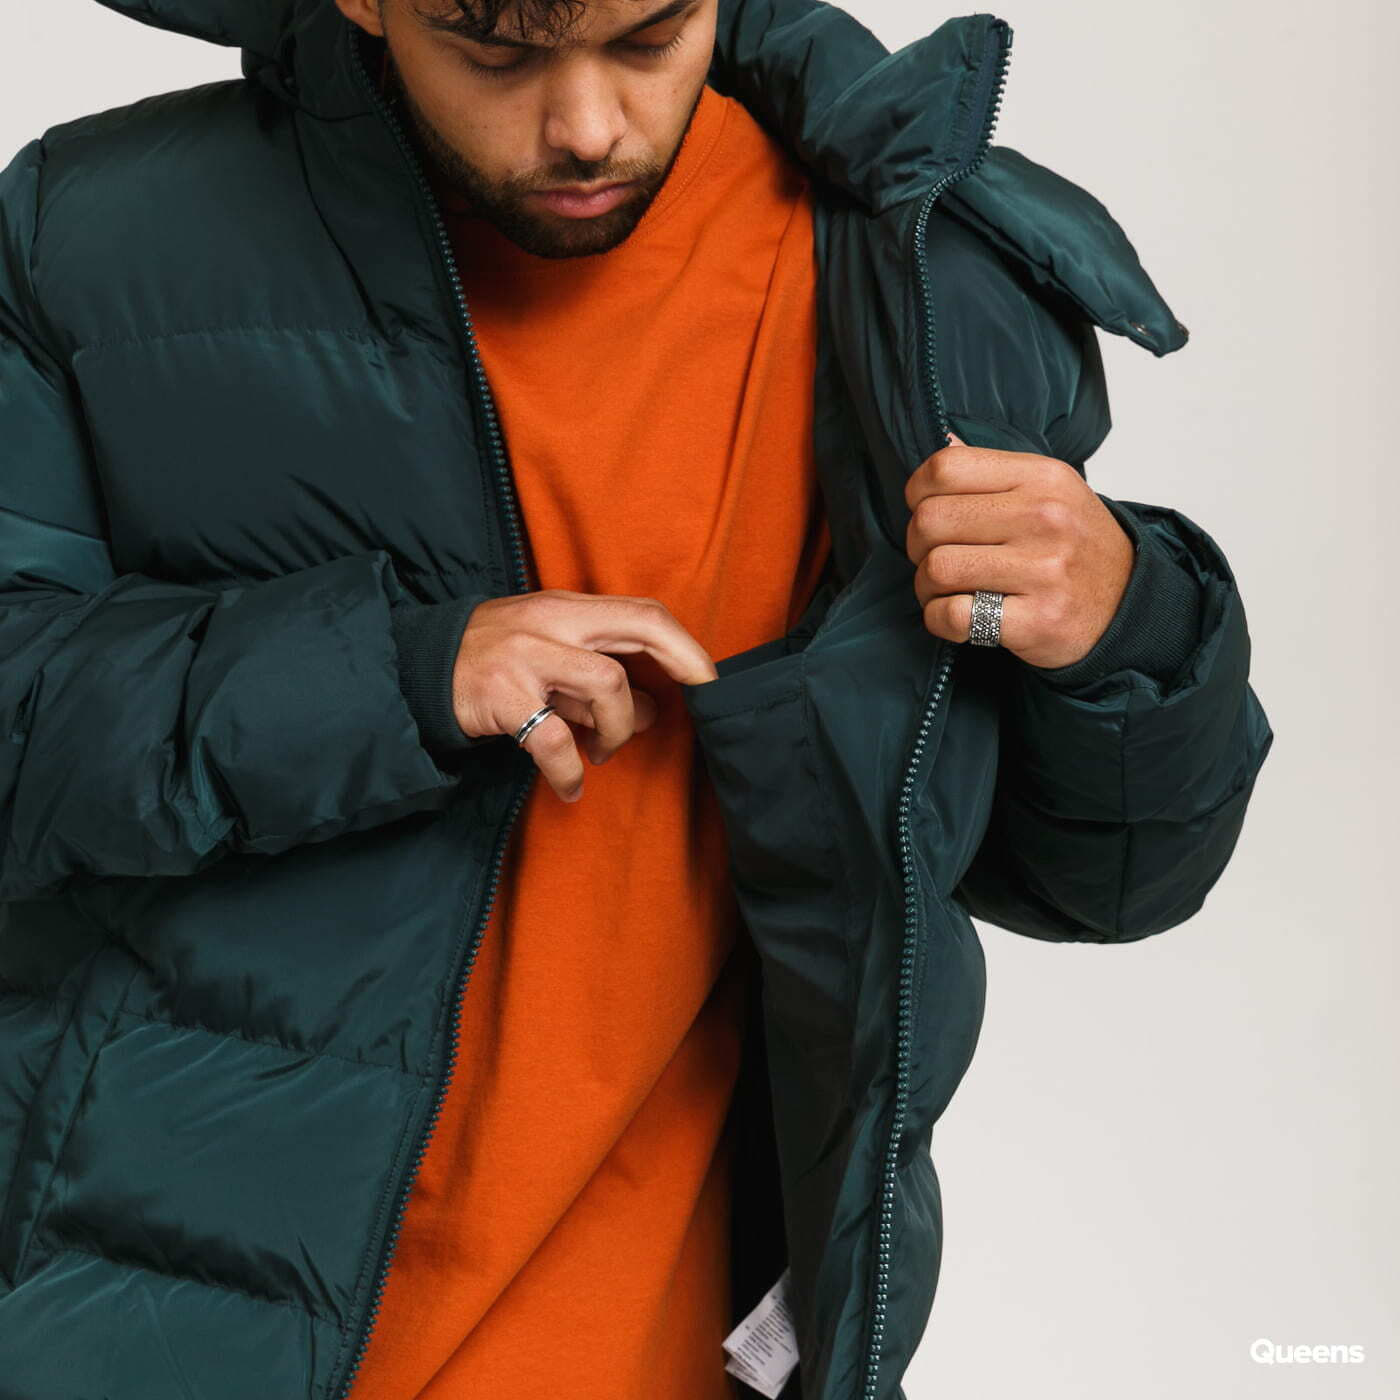 Urban Fashion Studio Men's Green Inflatable Leather Puffer Jacket